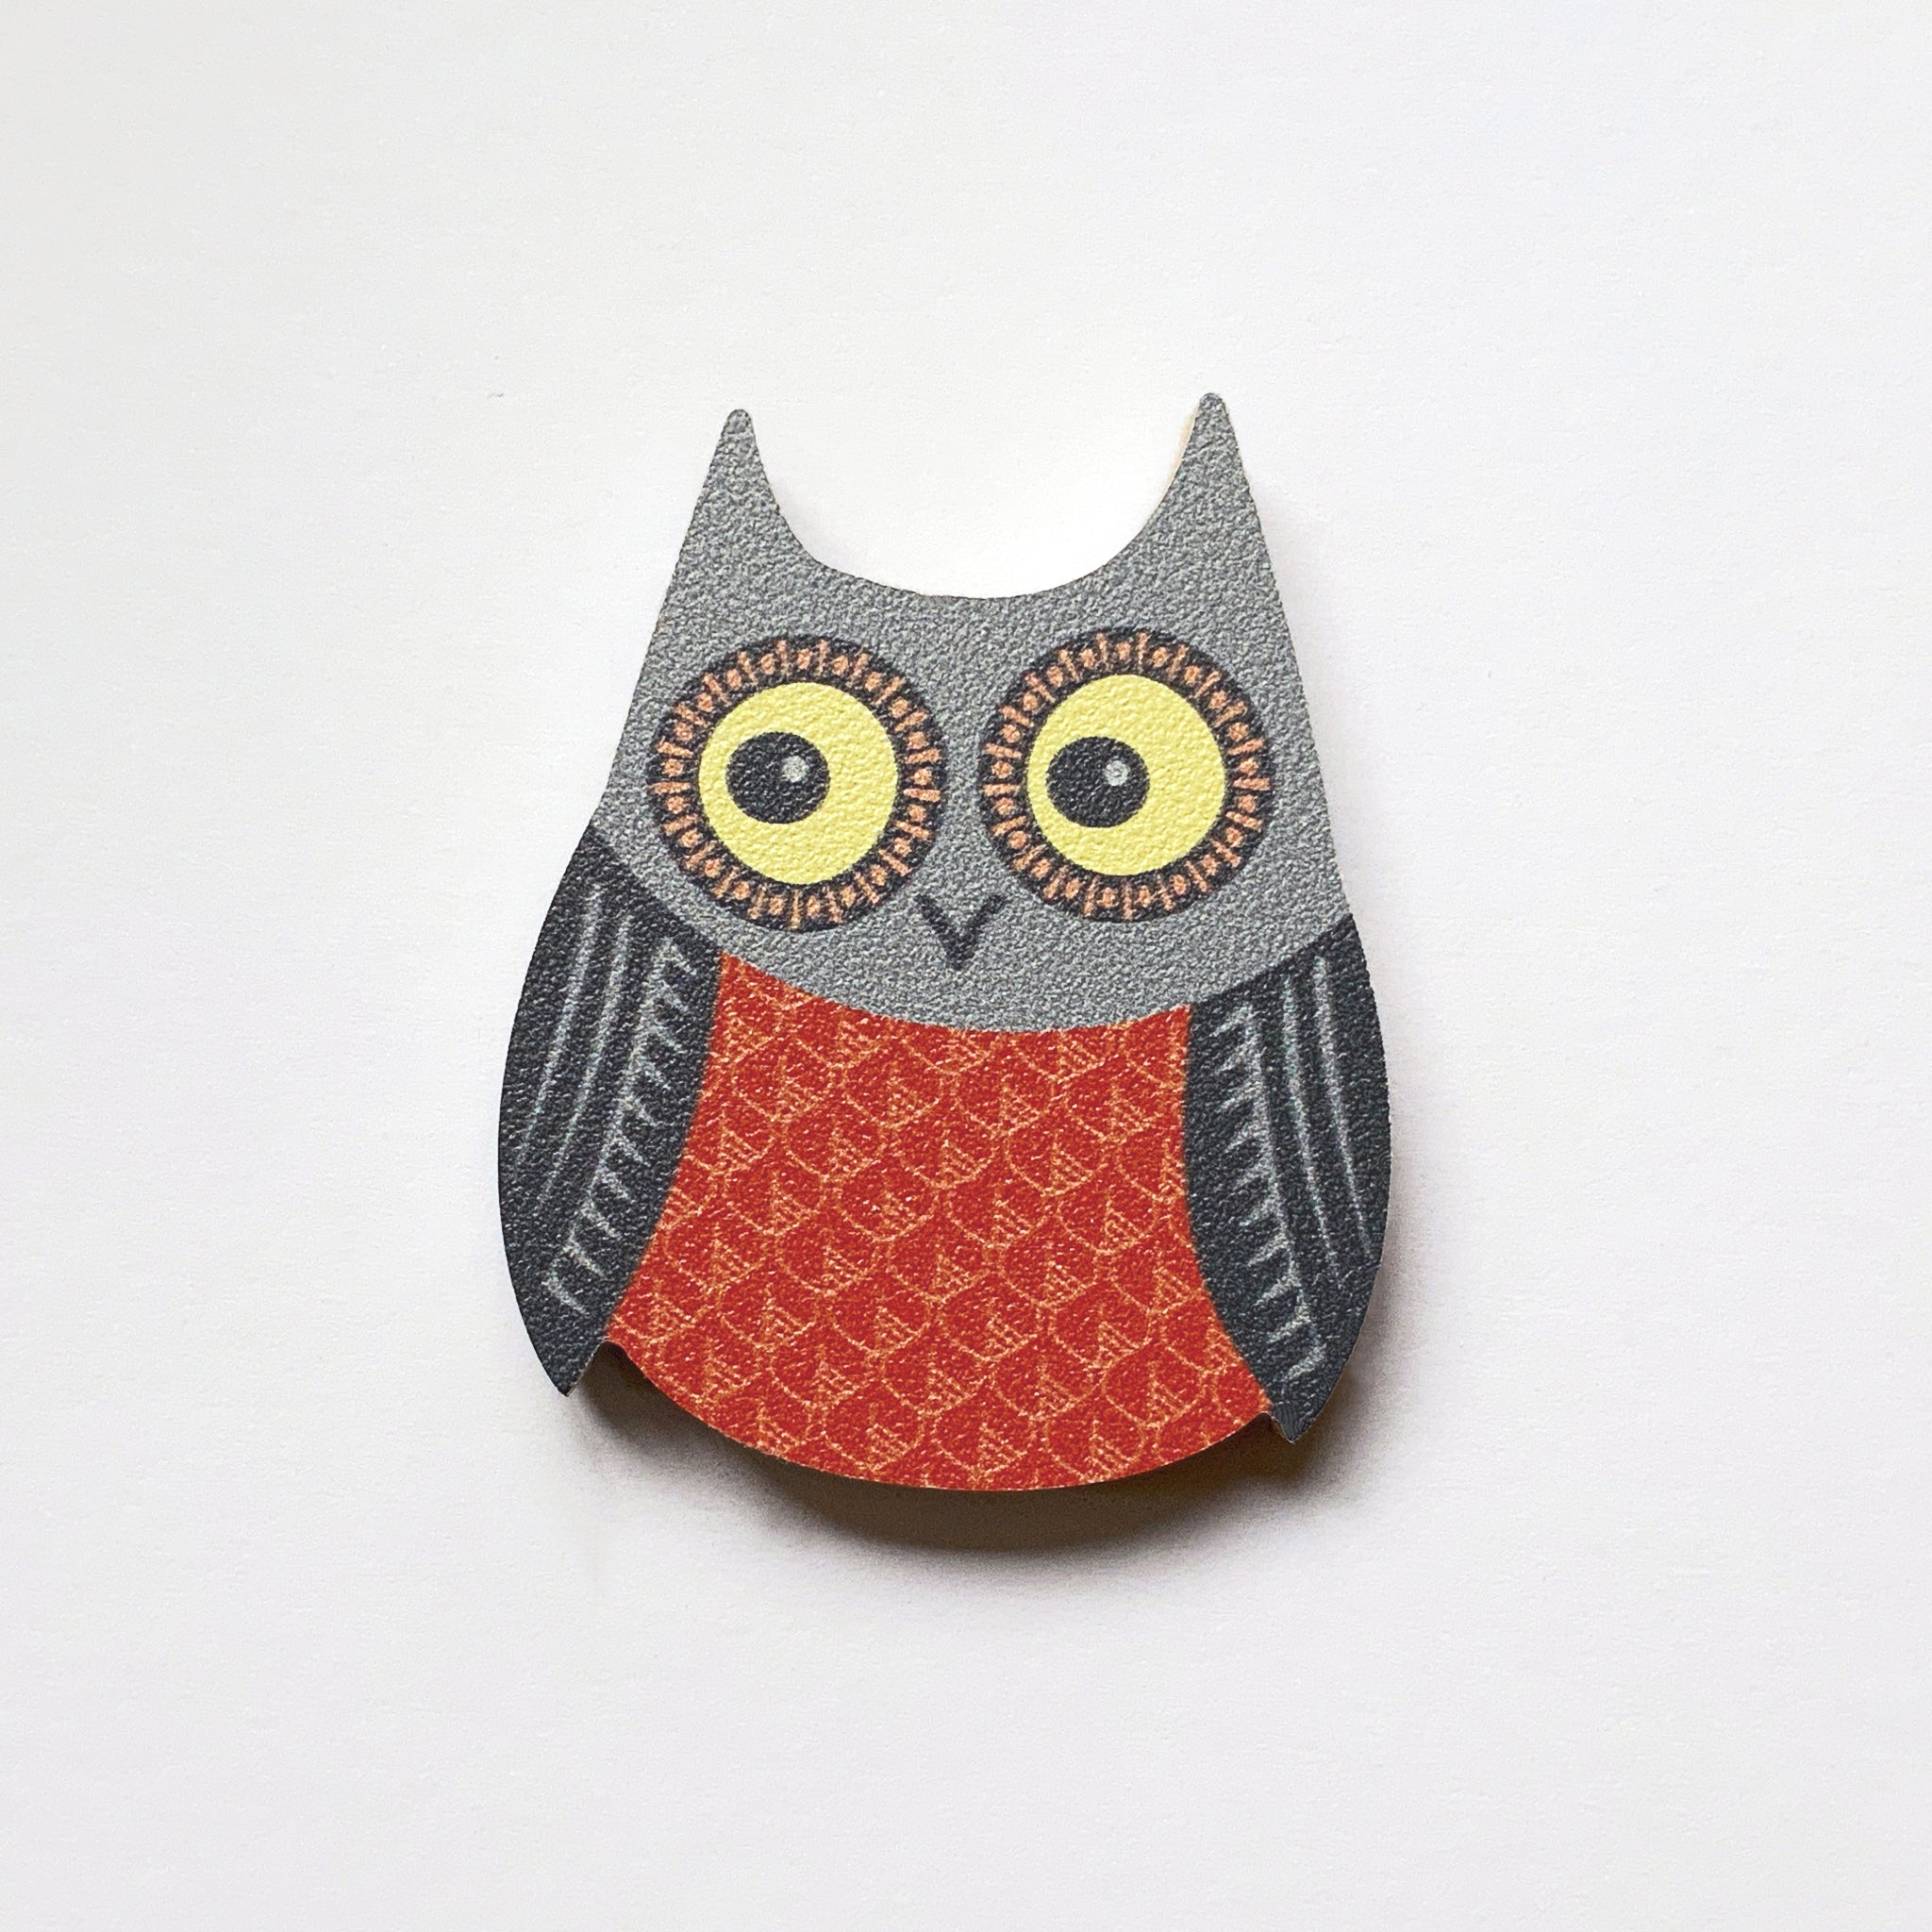 An owl shaped plywood fridge magnet by Beyond the Fridge